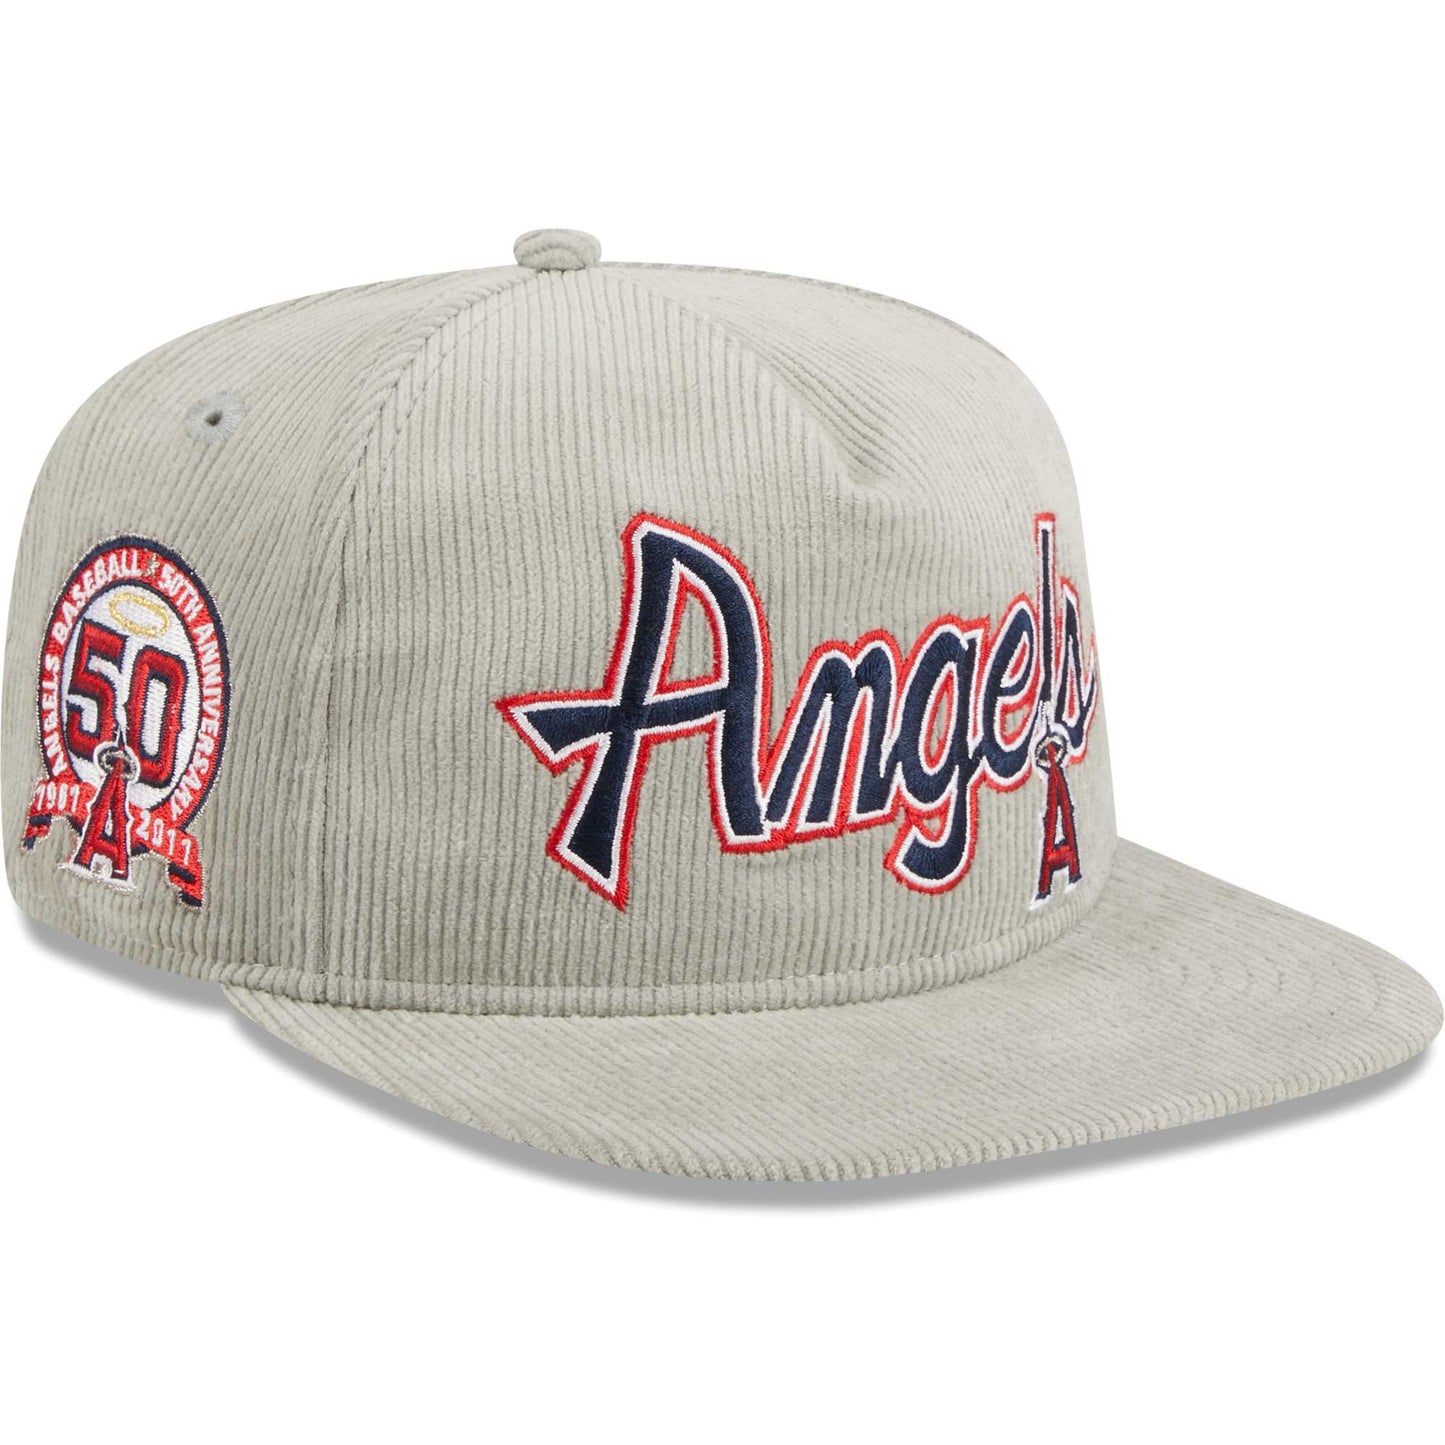 Los Angeles Angels New Era Corduroy Golfer Adjustable Hat - Gray